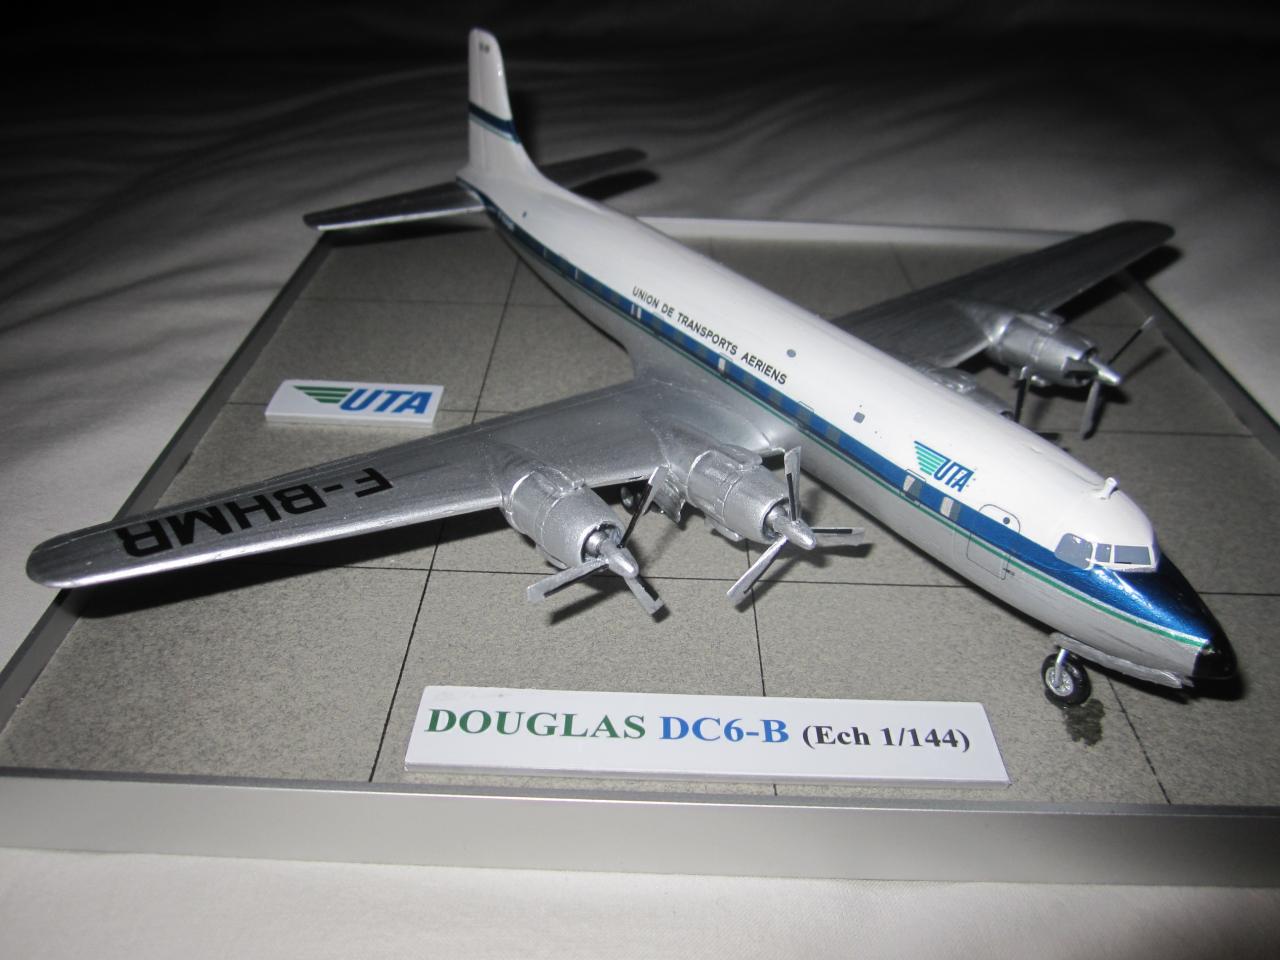 DOUGLAS DC6-B UTA